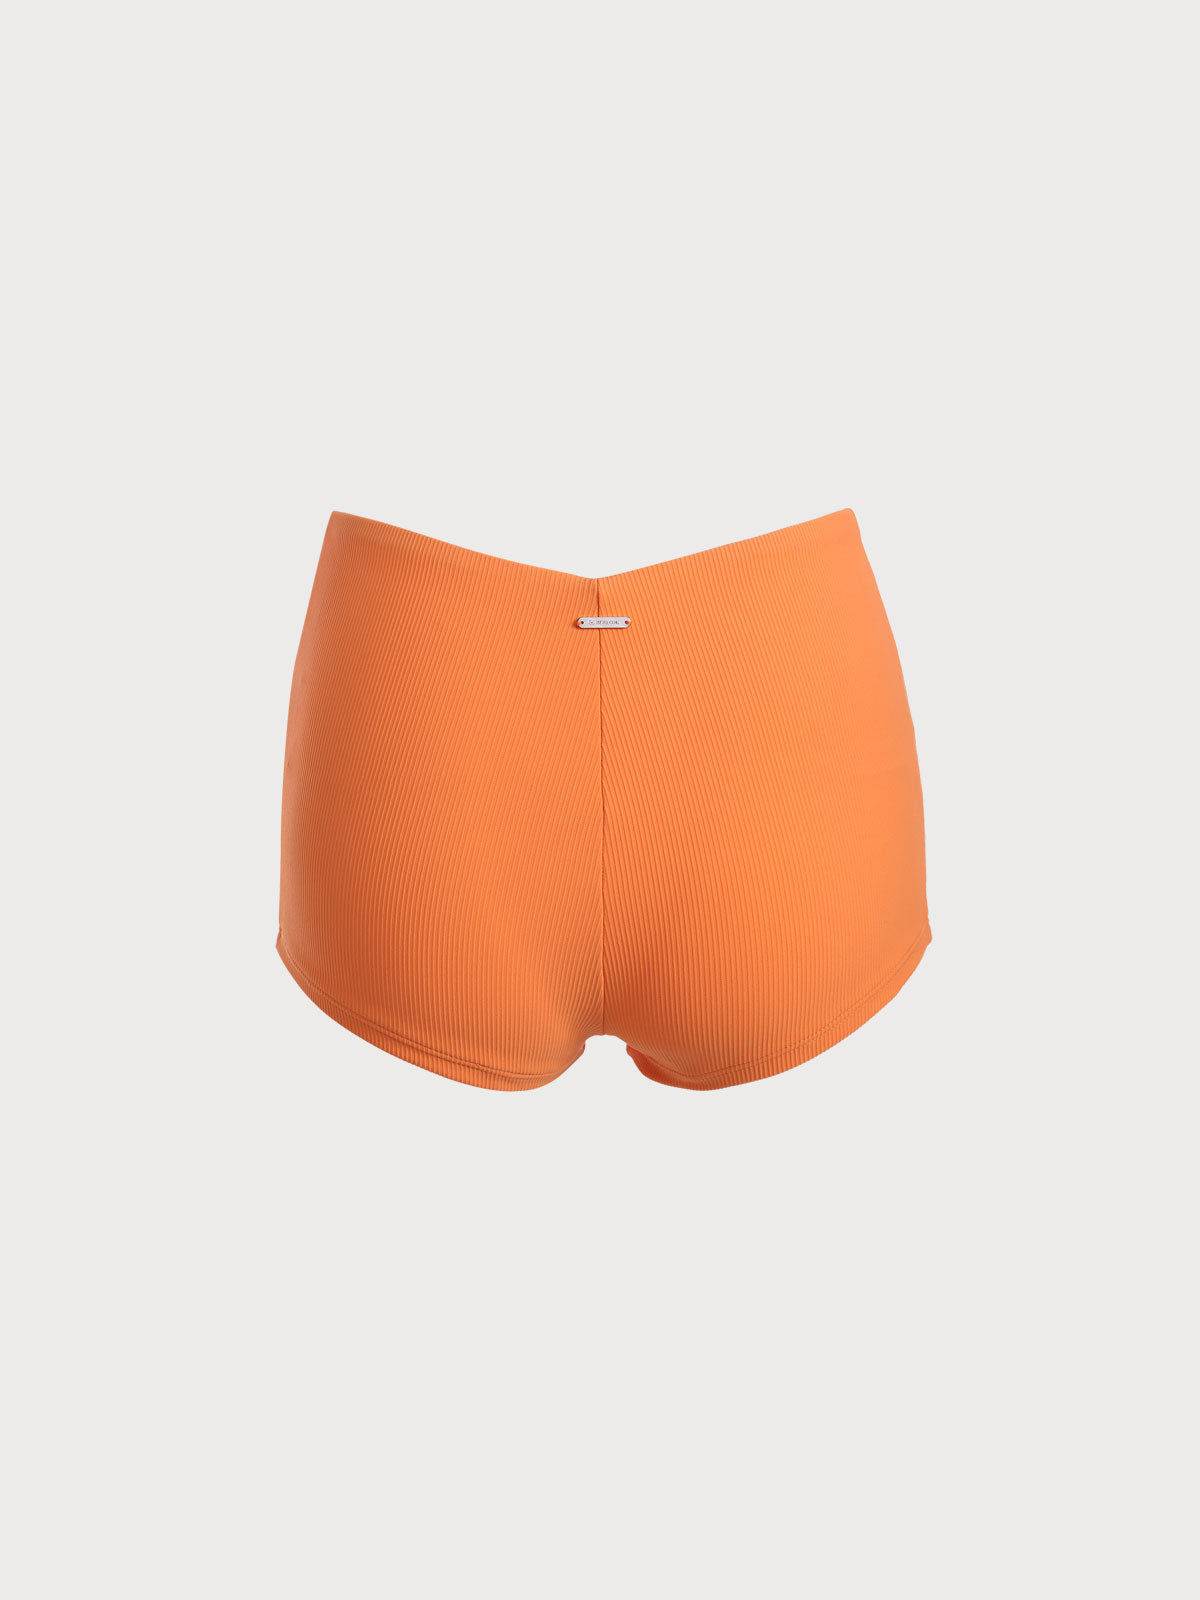 V-Cut Full Coverage Bikini Bottom & Reviews - Orange - Sustainable